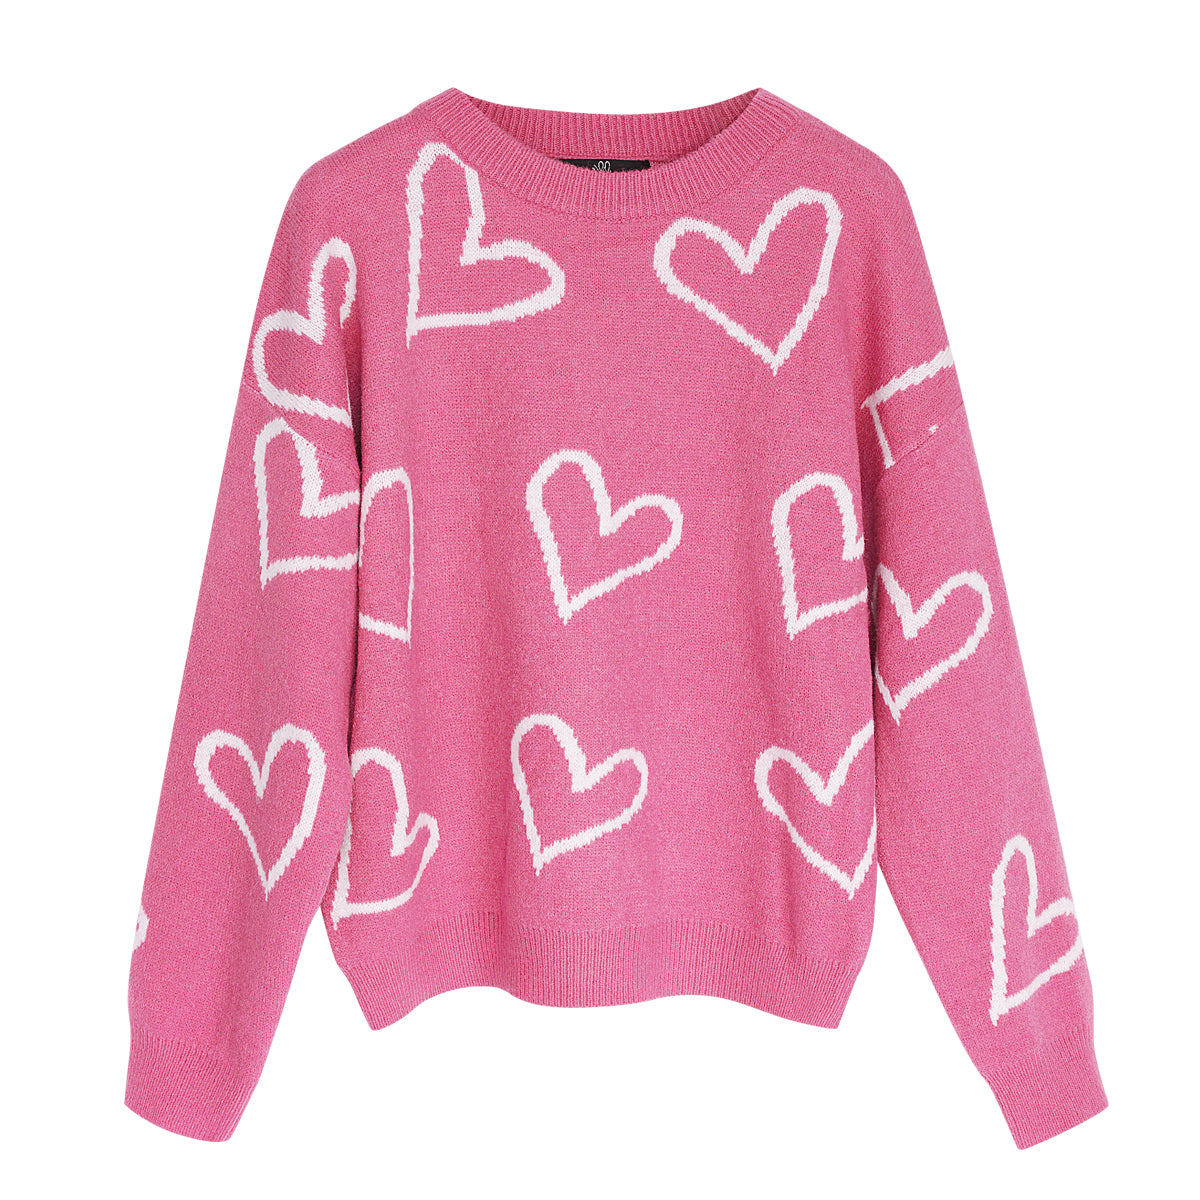 Hearts sweater